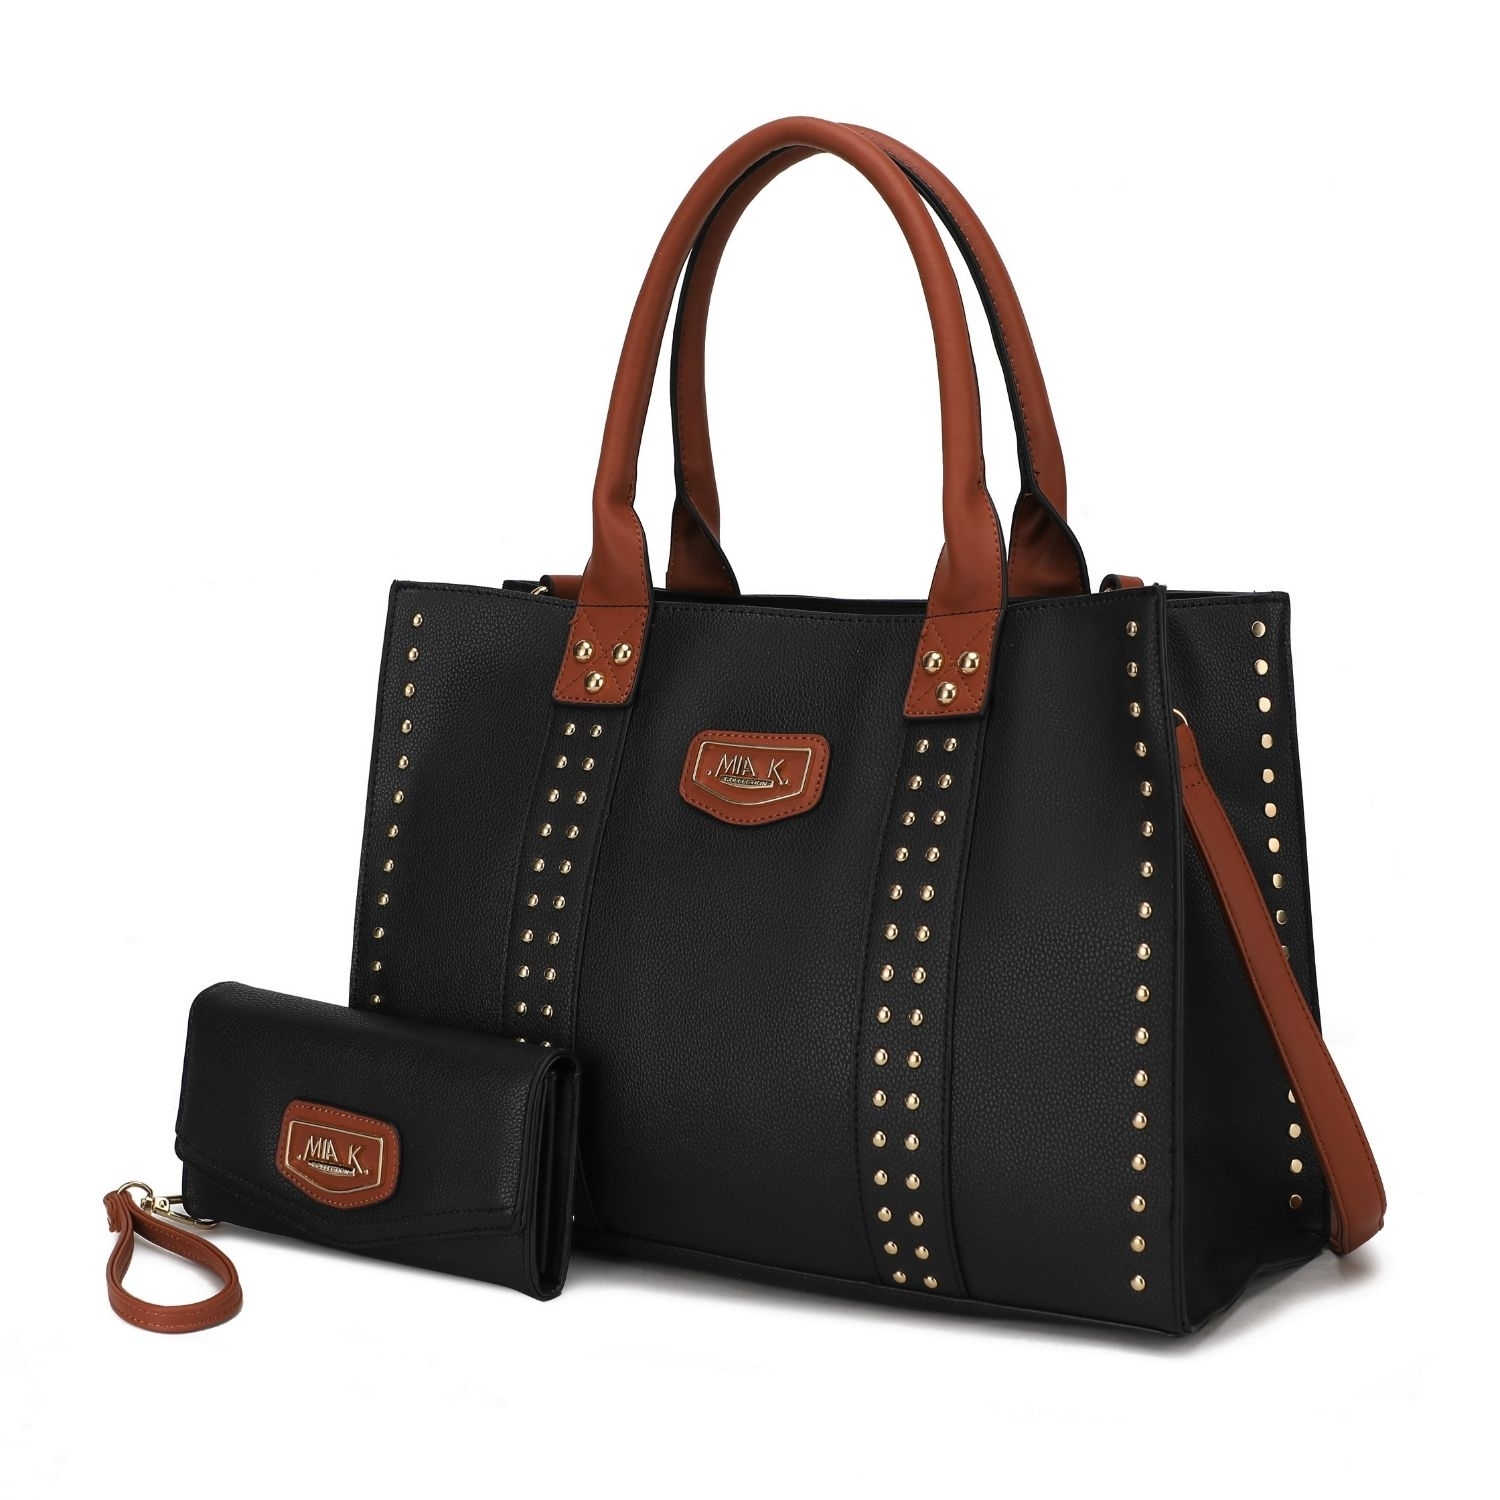 MKF Collection Davina Vegan Leather Women's Tote Bag By Mia K With Wallet -2 Pieces - Fuchsia